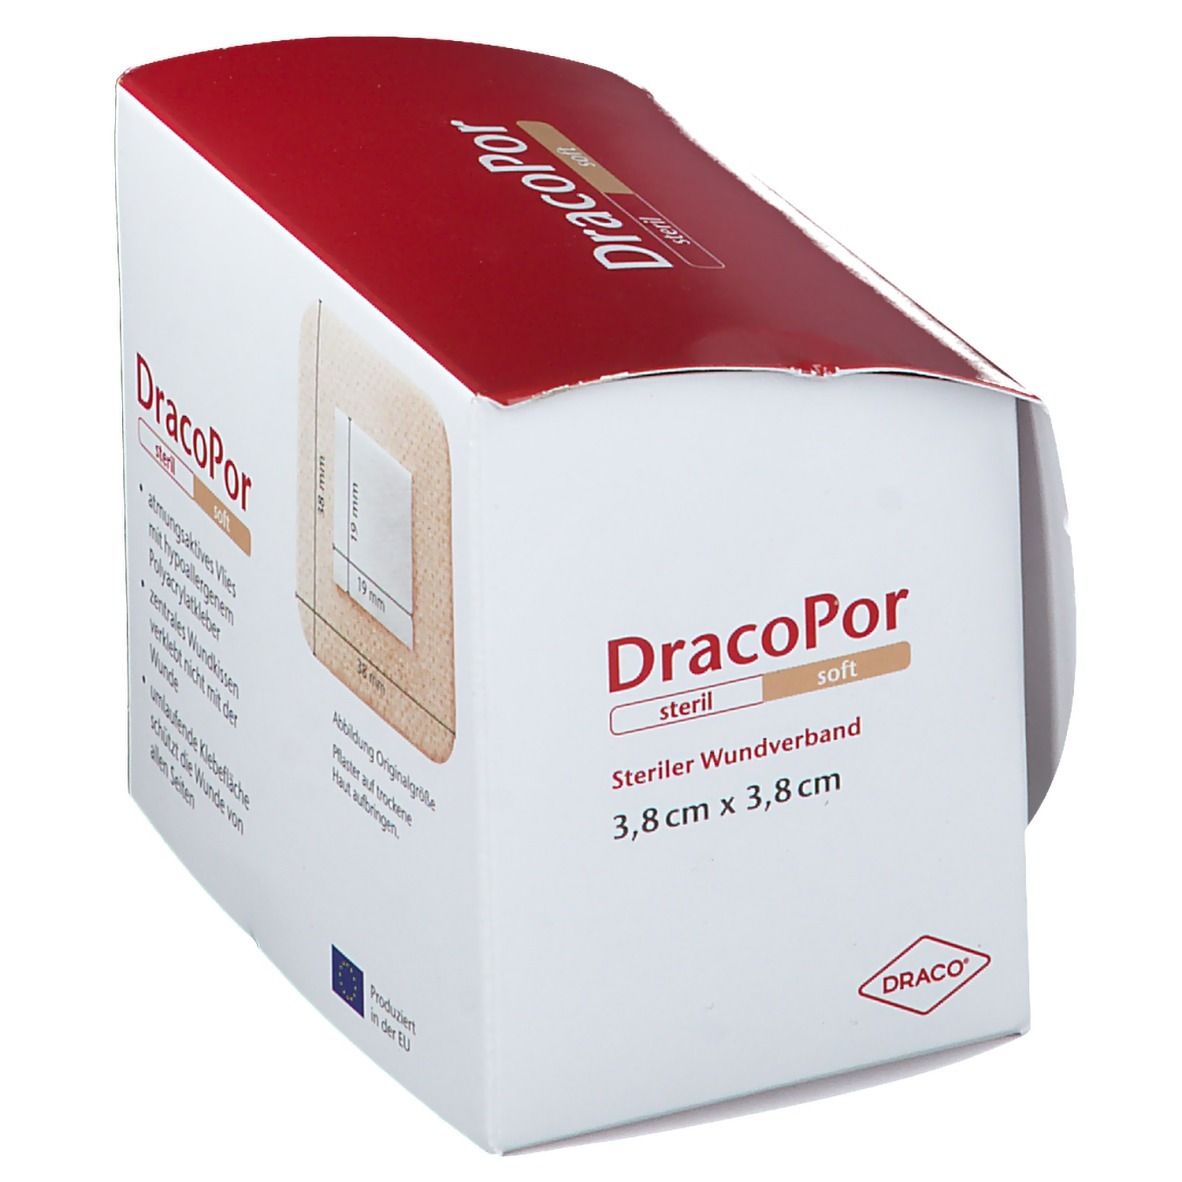 DracoPor Wundverband Soft hautfarben steril 3,8 x 3,8cm